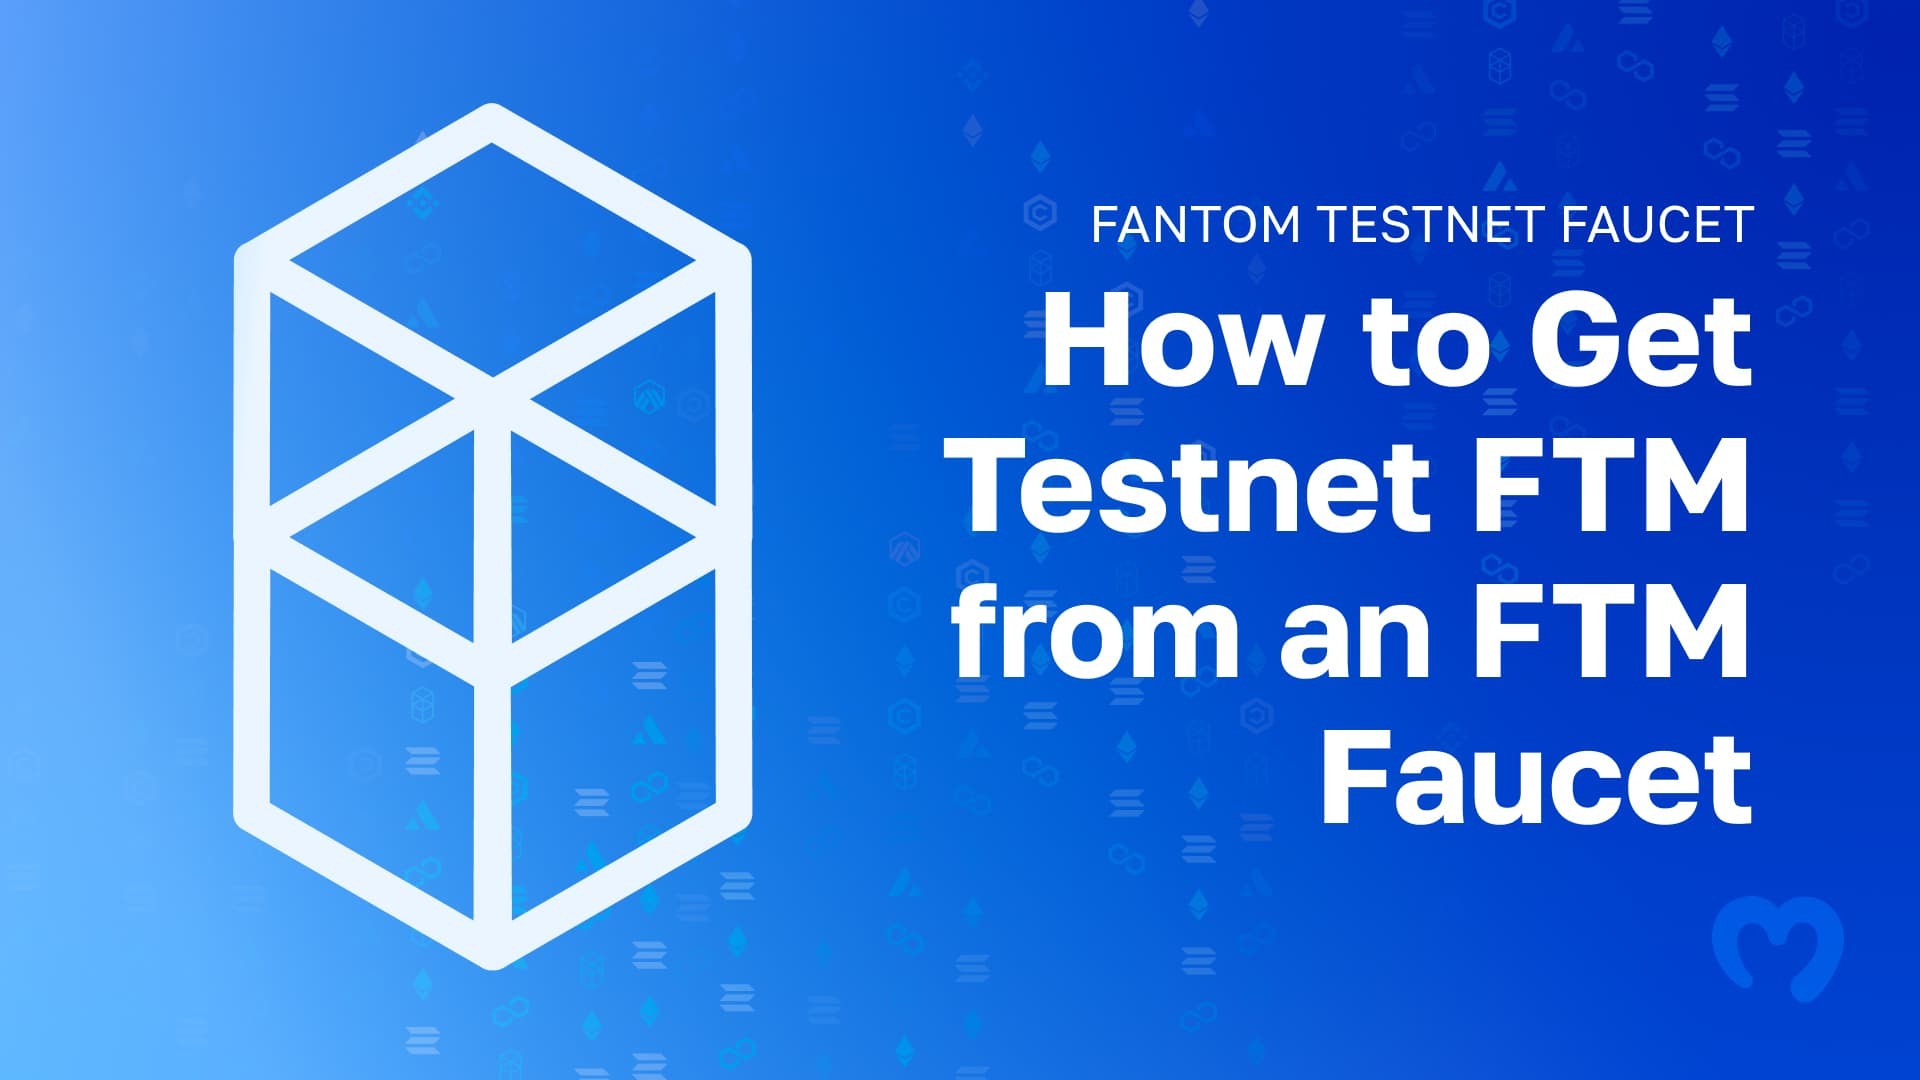 Fantom Testnet Faucet - How to Get Testnet FTM from an FTM Faucet